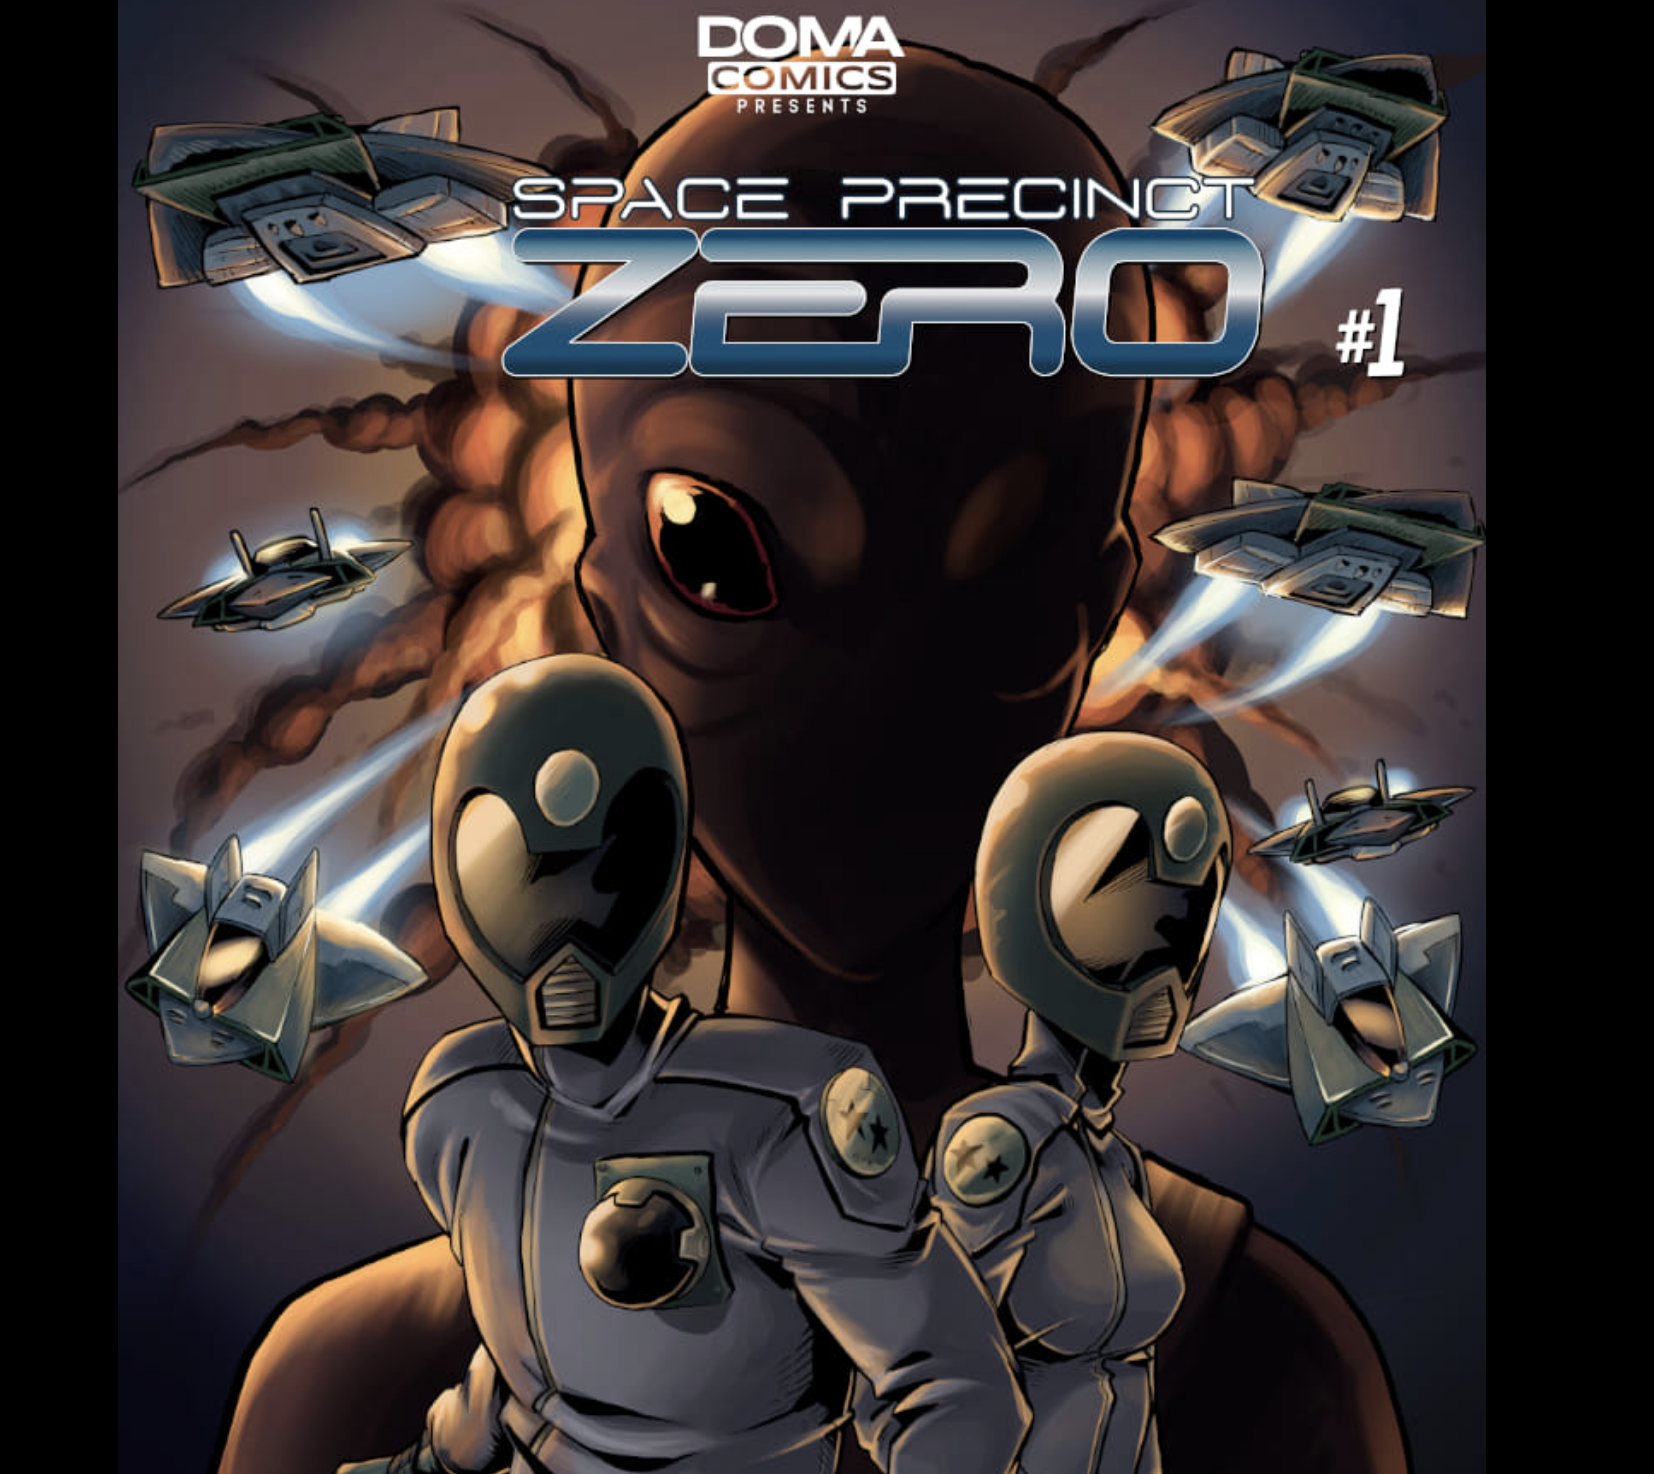 Art of The DAY: The brilliant cover to Space Precinct Zero #1 by Jayson Santo